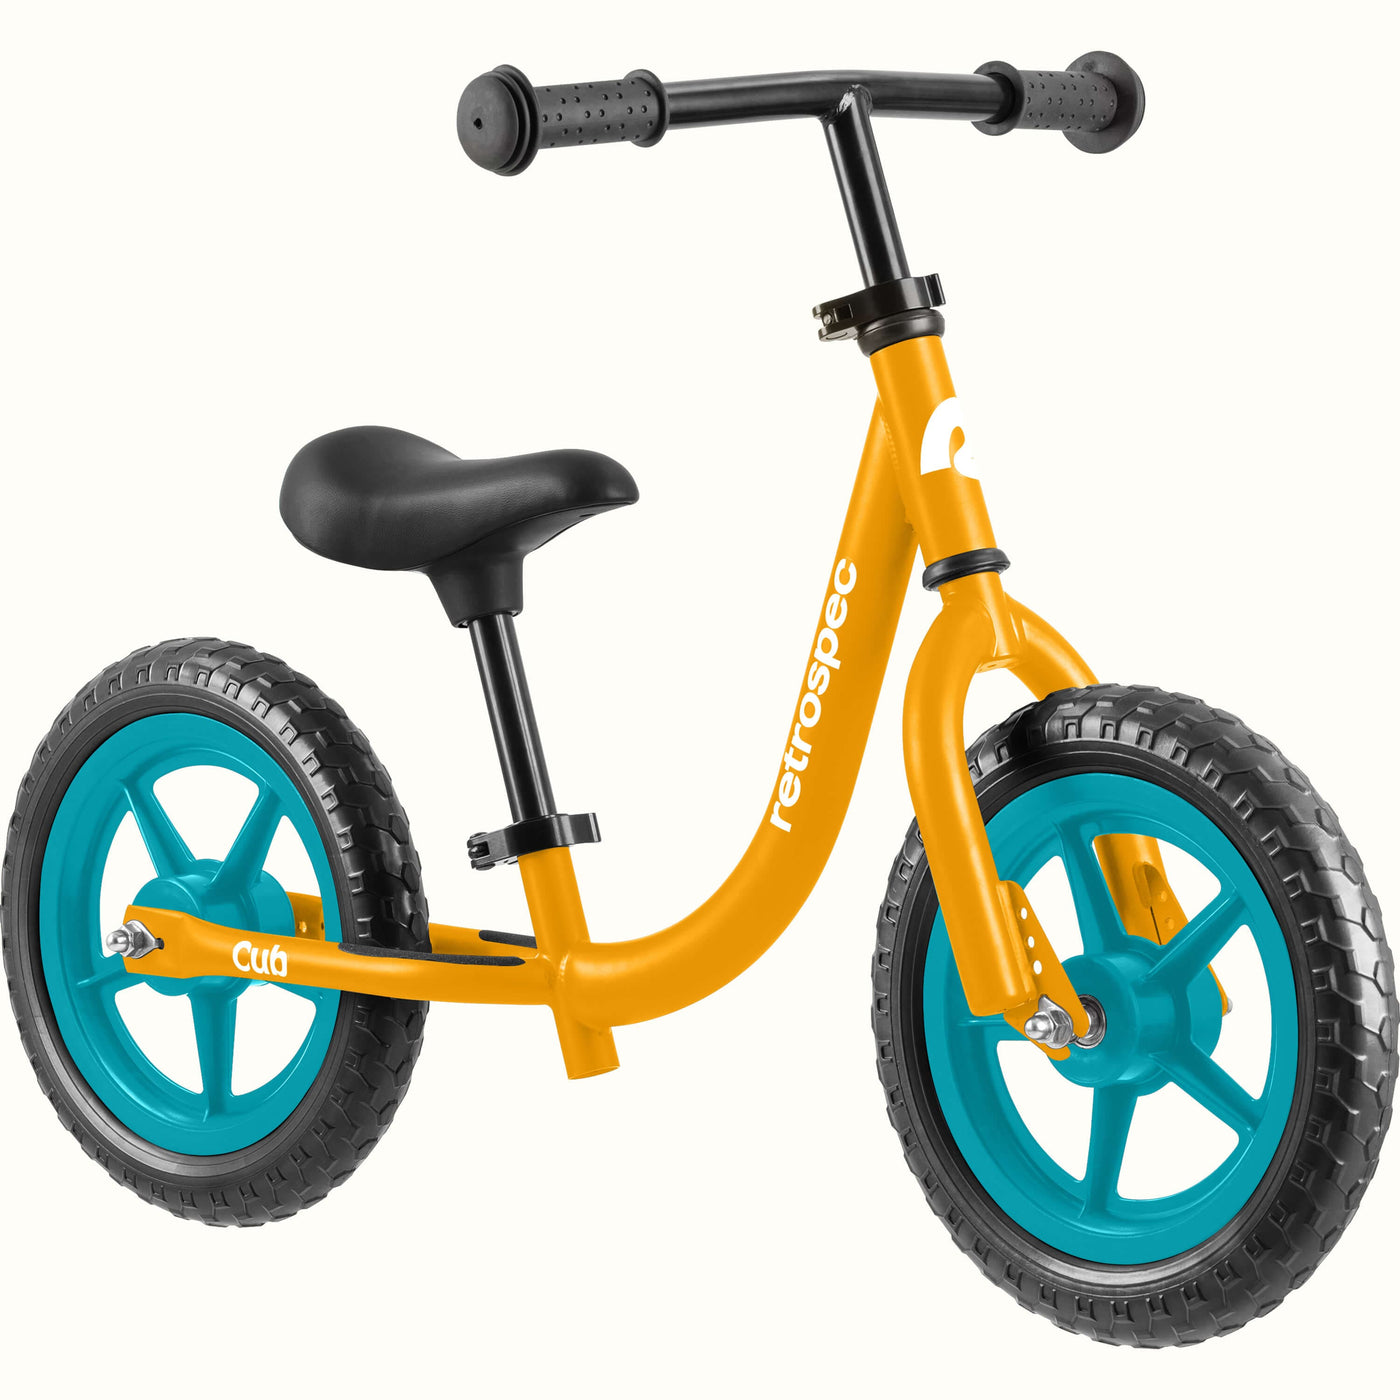 Cub 2 Kids’ Balance Bike (18 months-4 years) | Goldfish